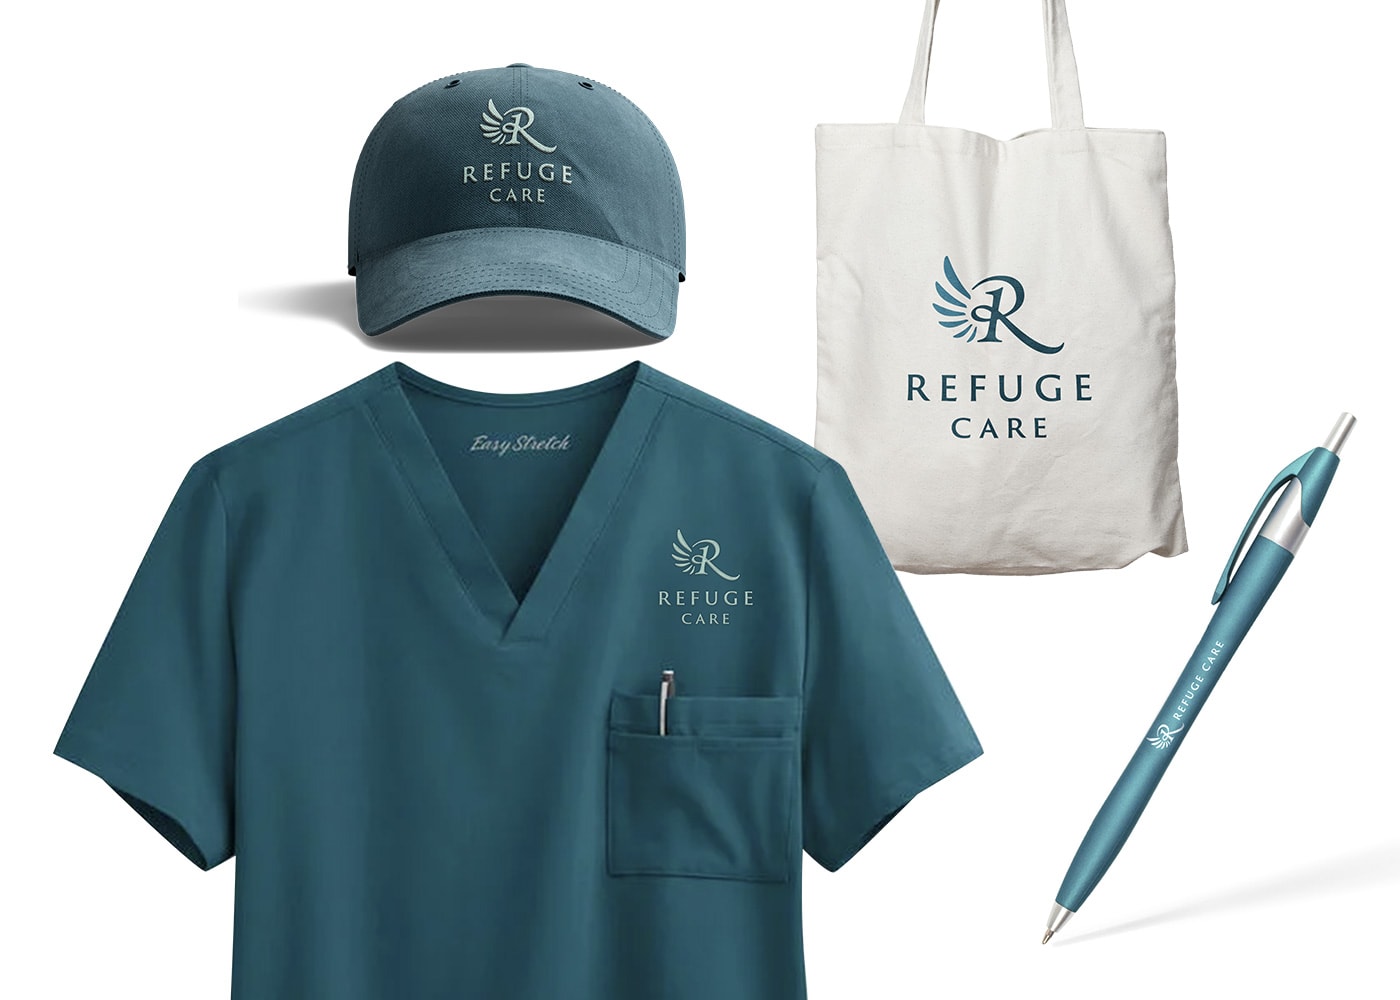 Mockup of nurse scrubs, baseball cap, canvas tote, and pen for Refuge Care